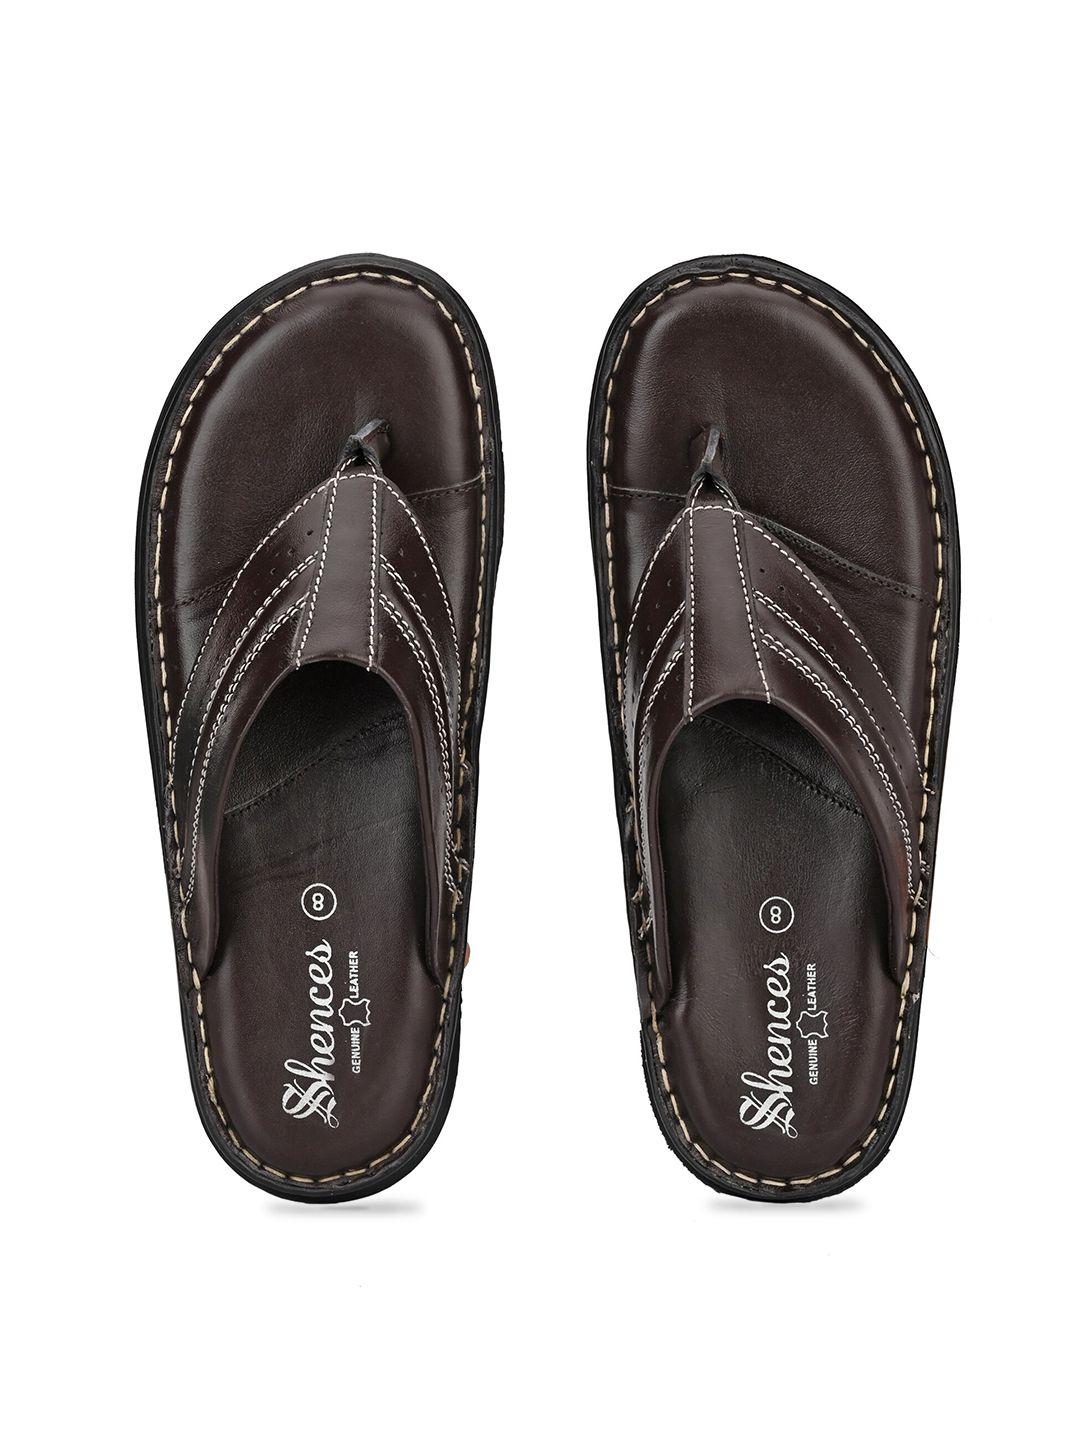 shences-men-brown-genuine-leather-comfort-sandals